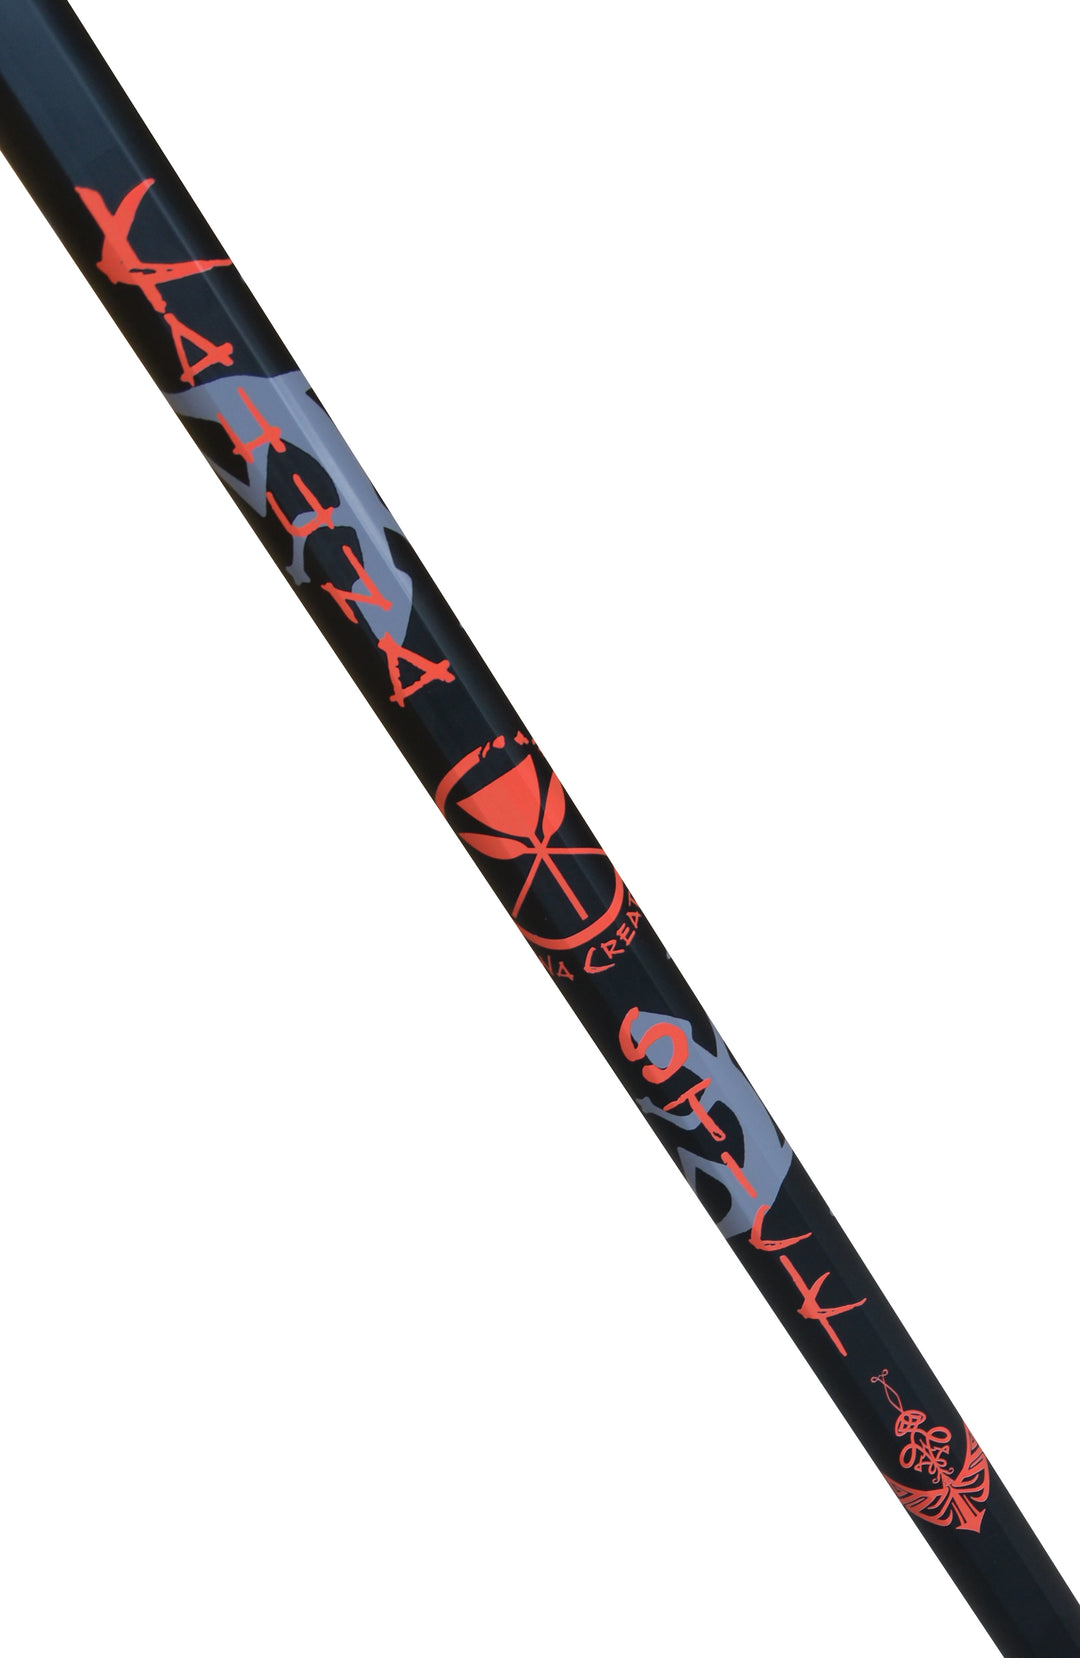 Adjustable Kahuna Big Stick - Magma w/ GenV Blade